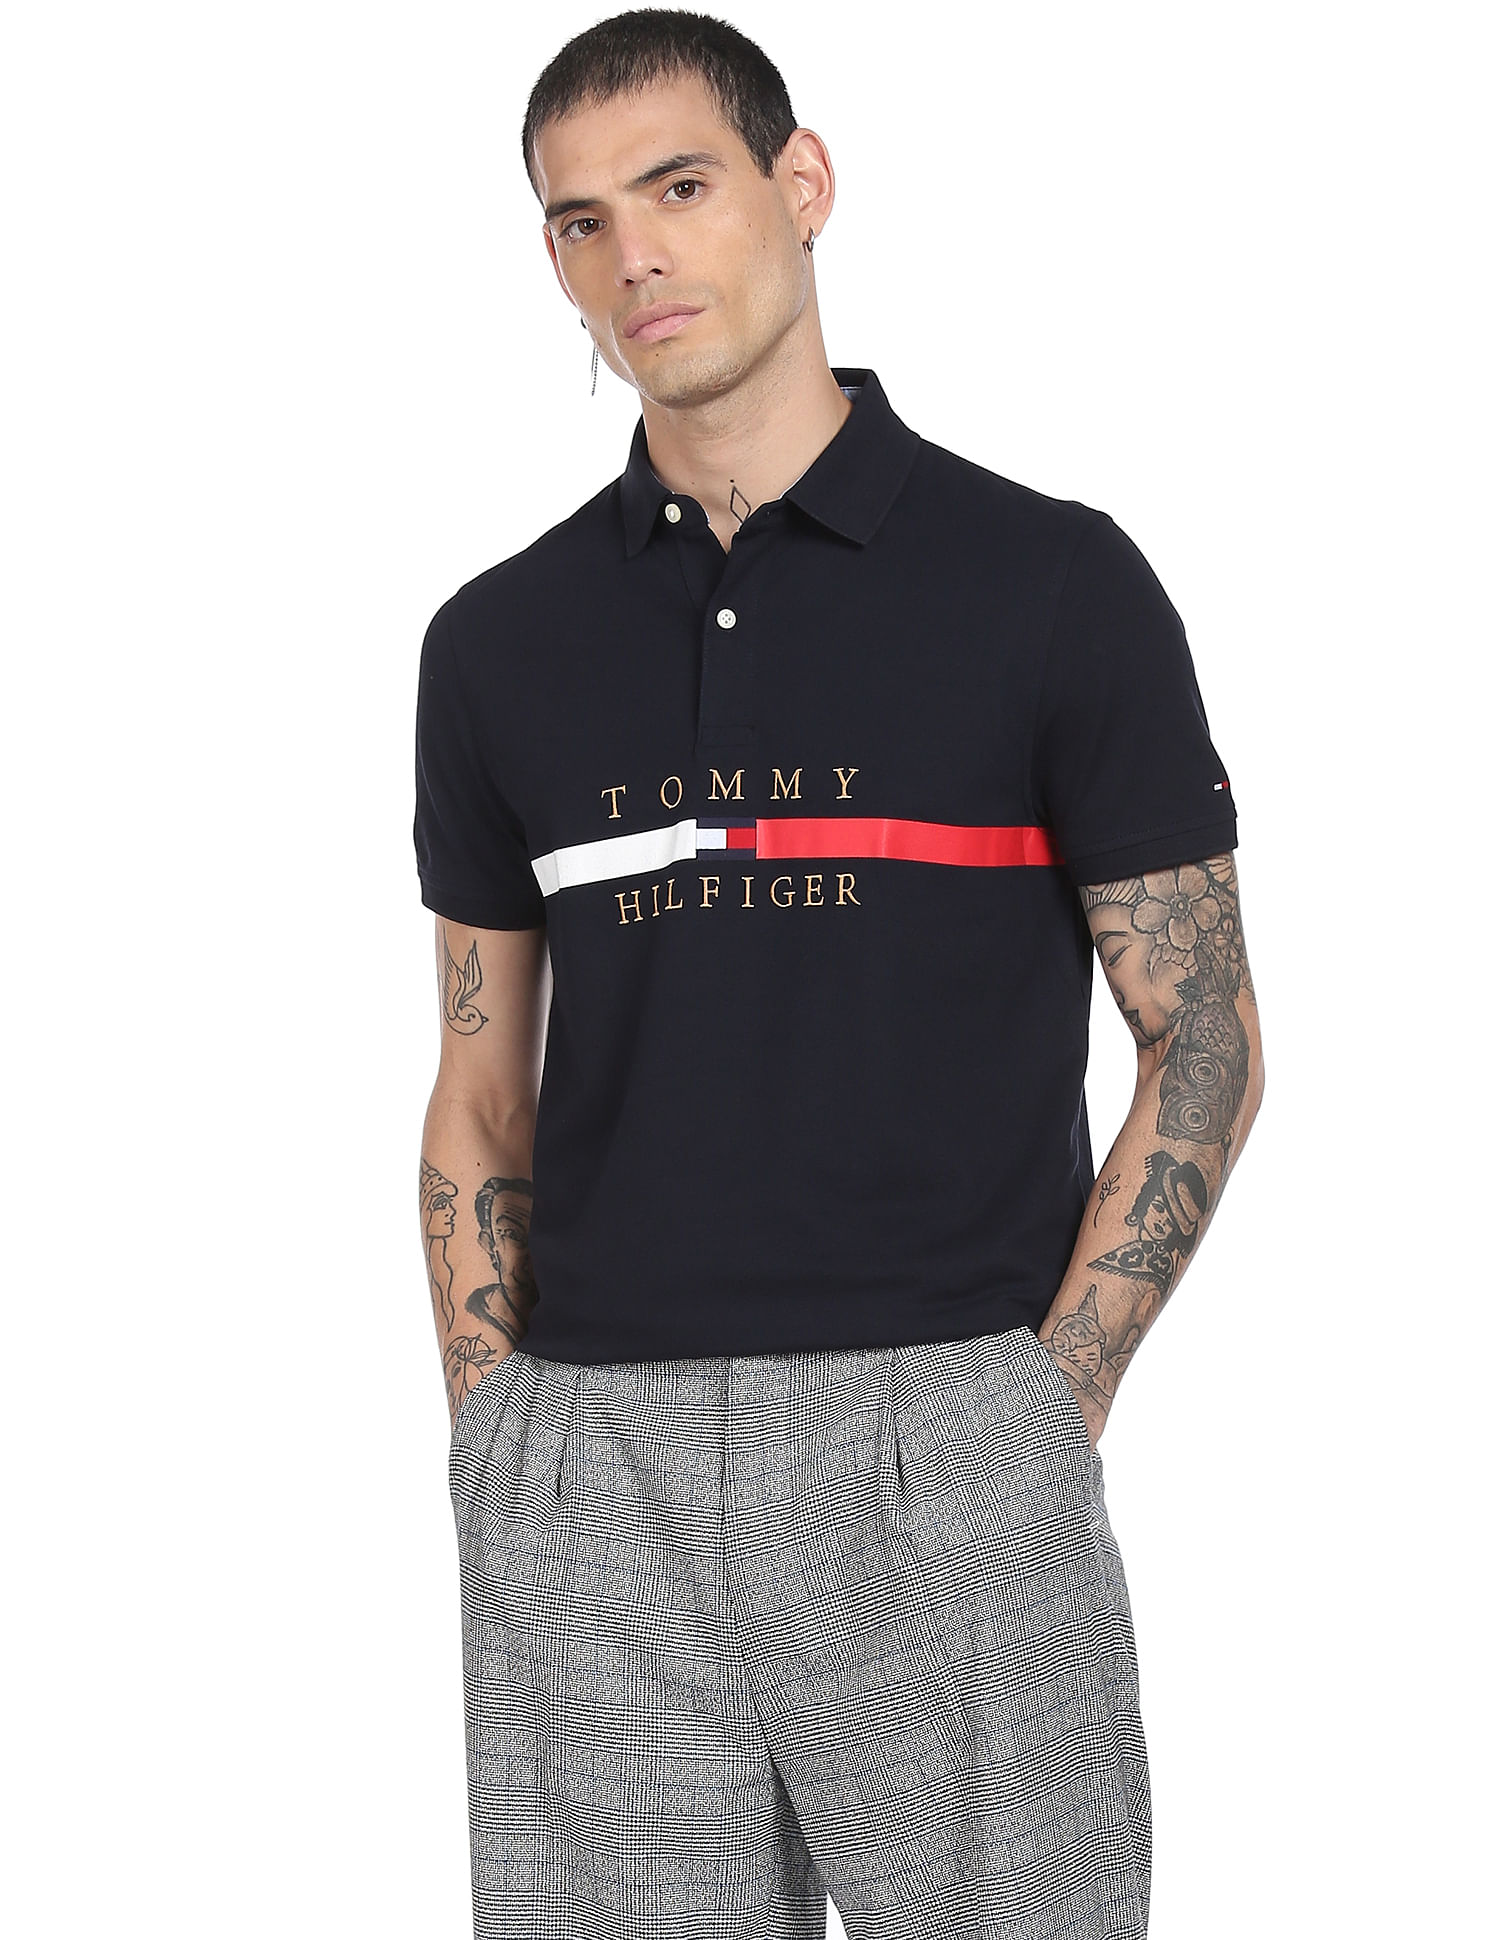 Buy Pique Logo Hilfiger Clinton Polo Men Embroidered Navy Tommy Shirt